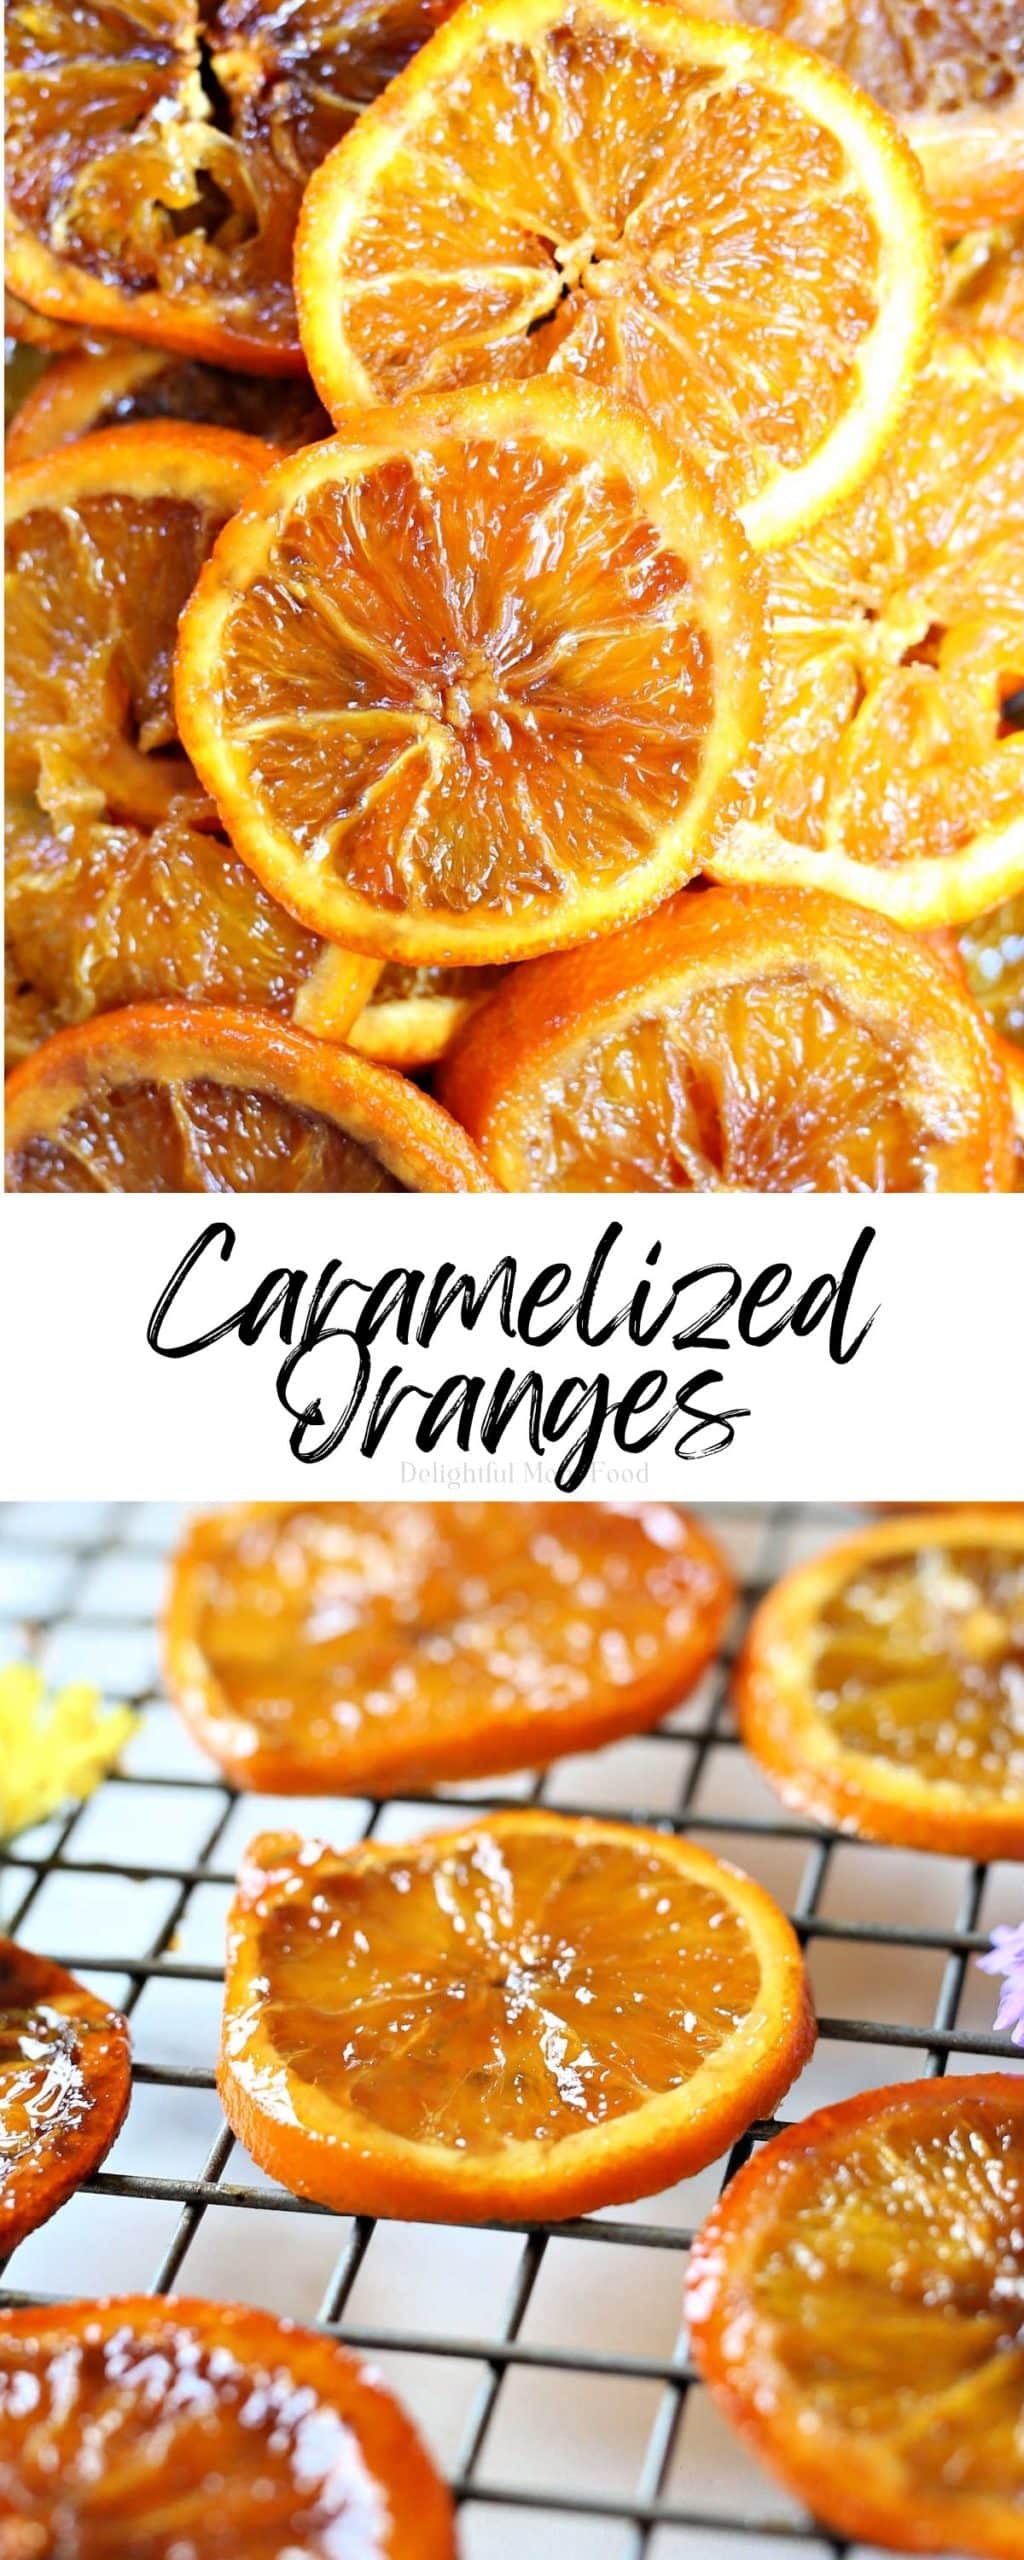 caramel candied oranges recipe